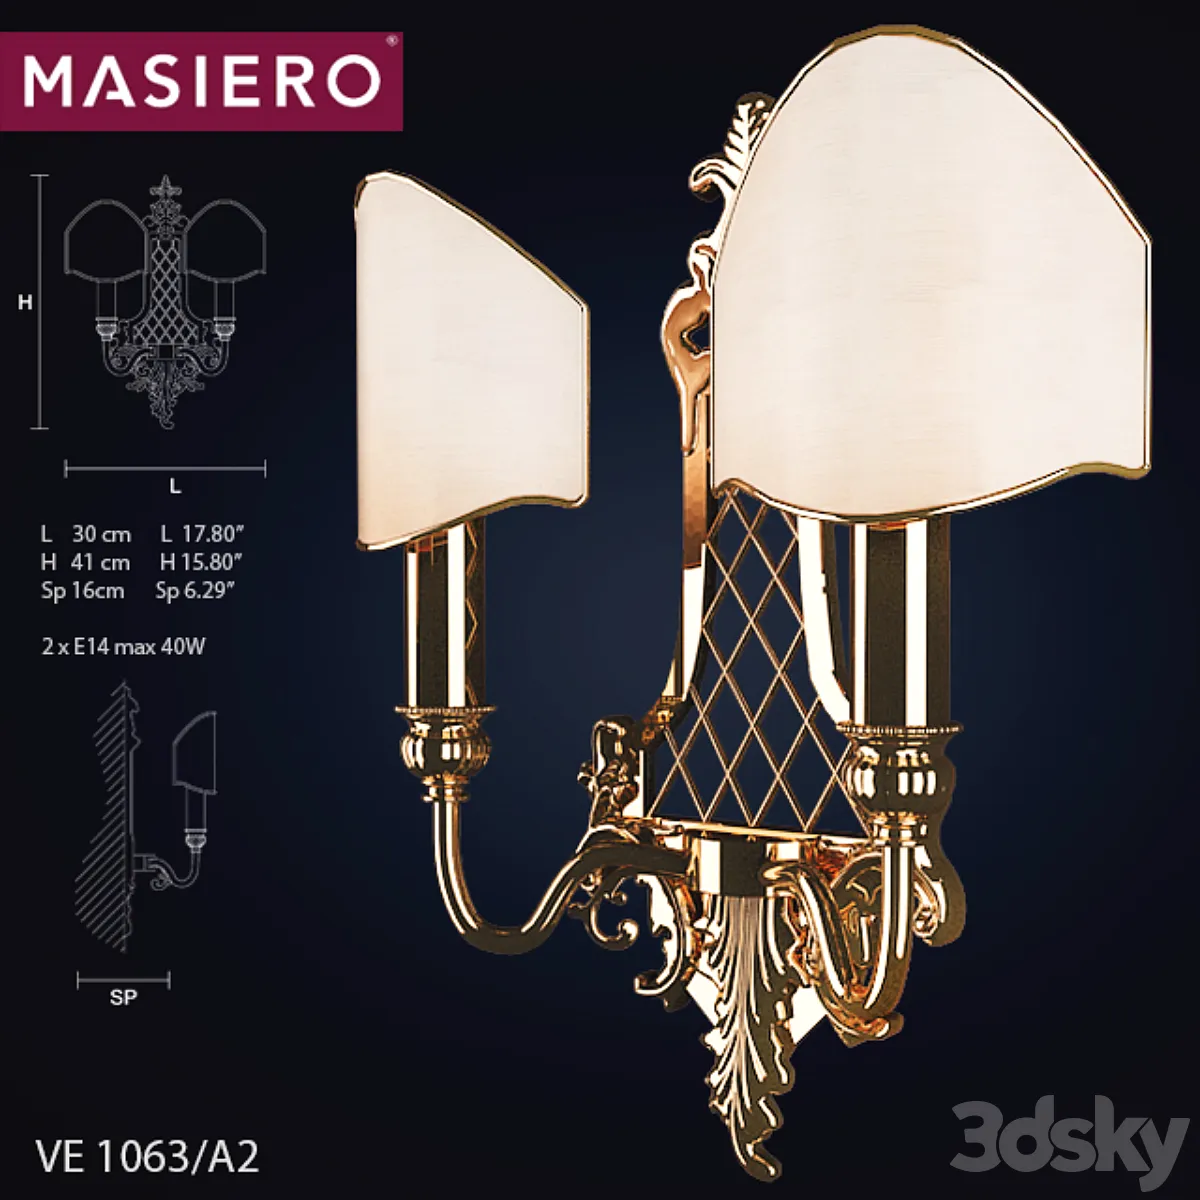 Masiero ve 1063 - A2 - Wall light - 3D model